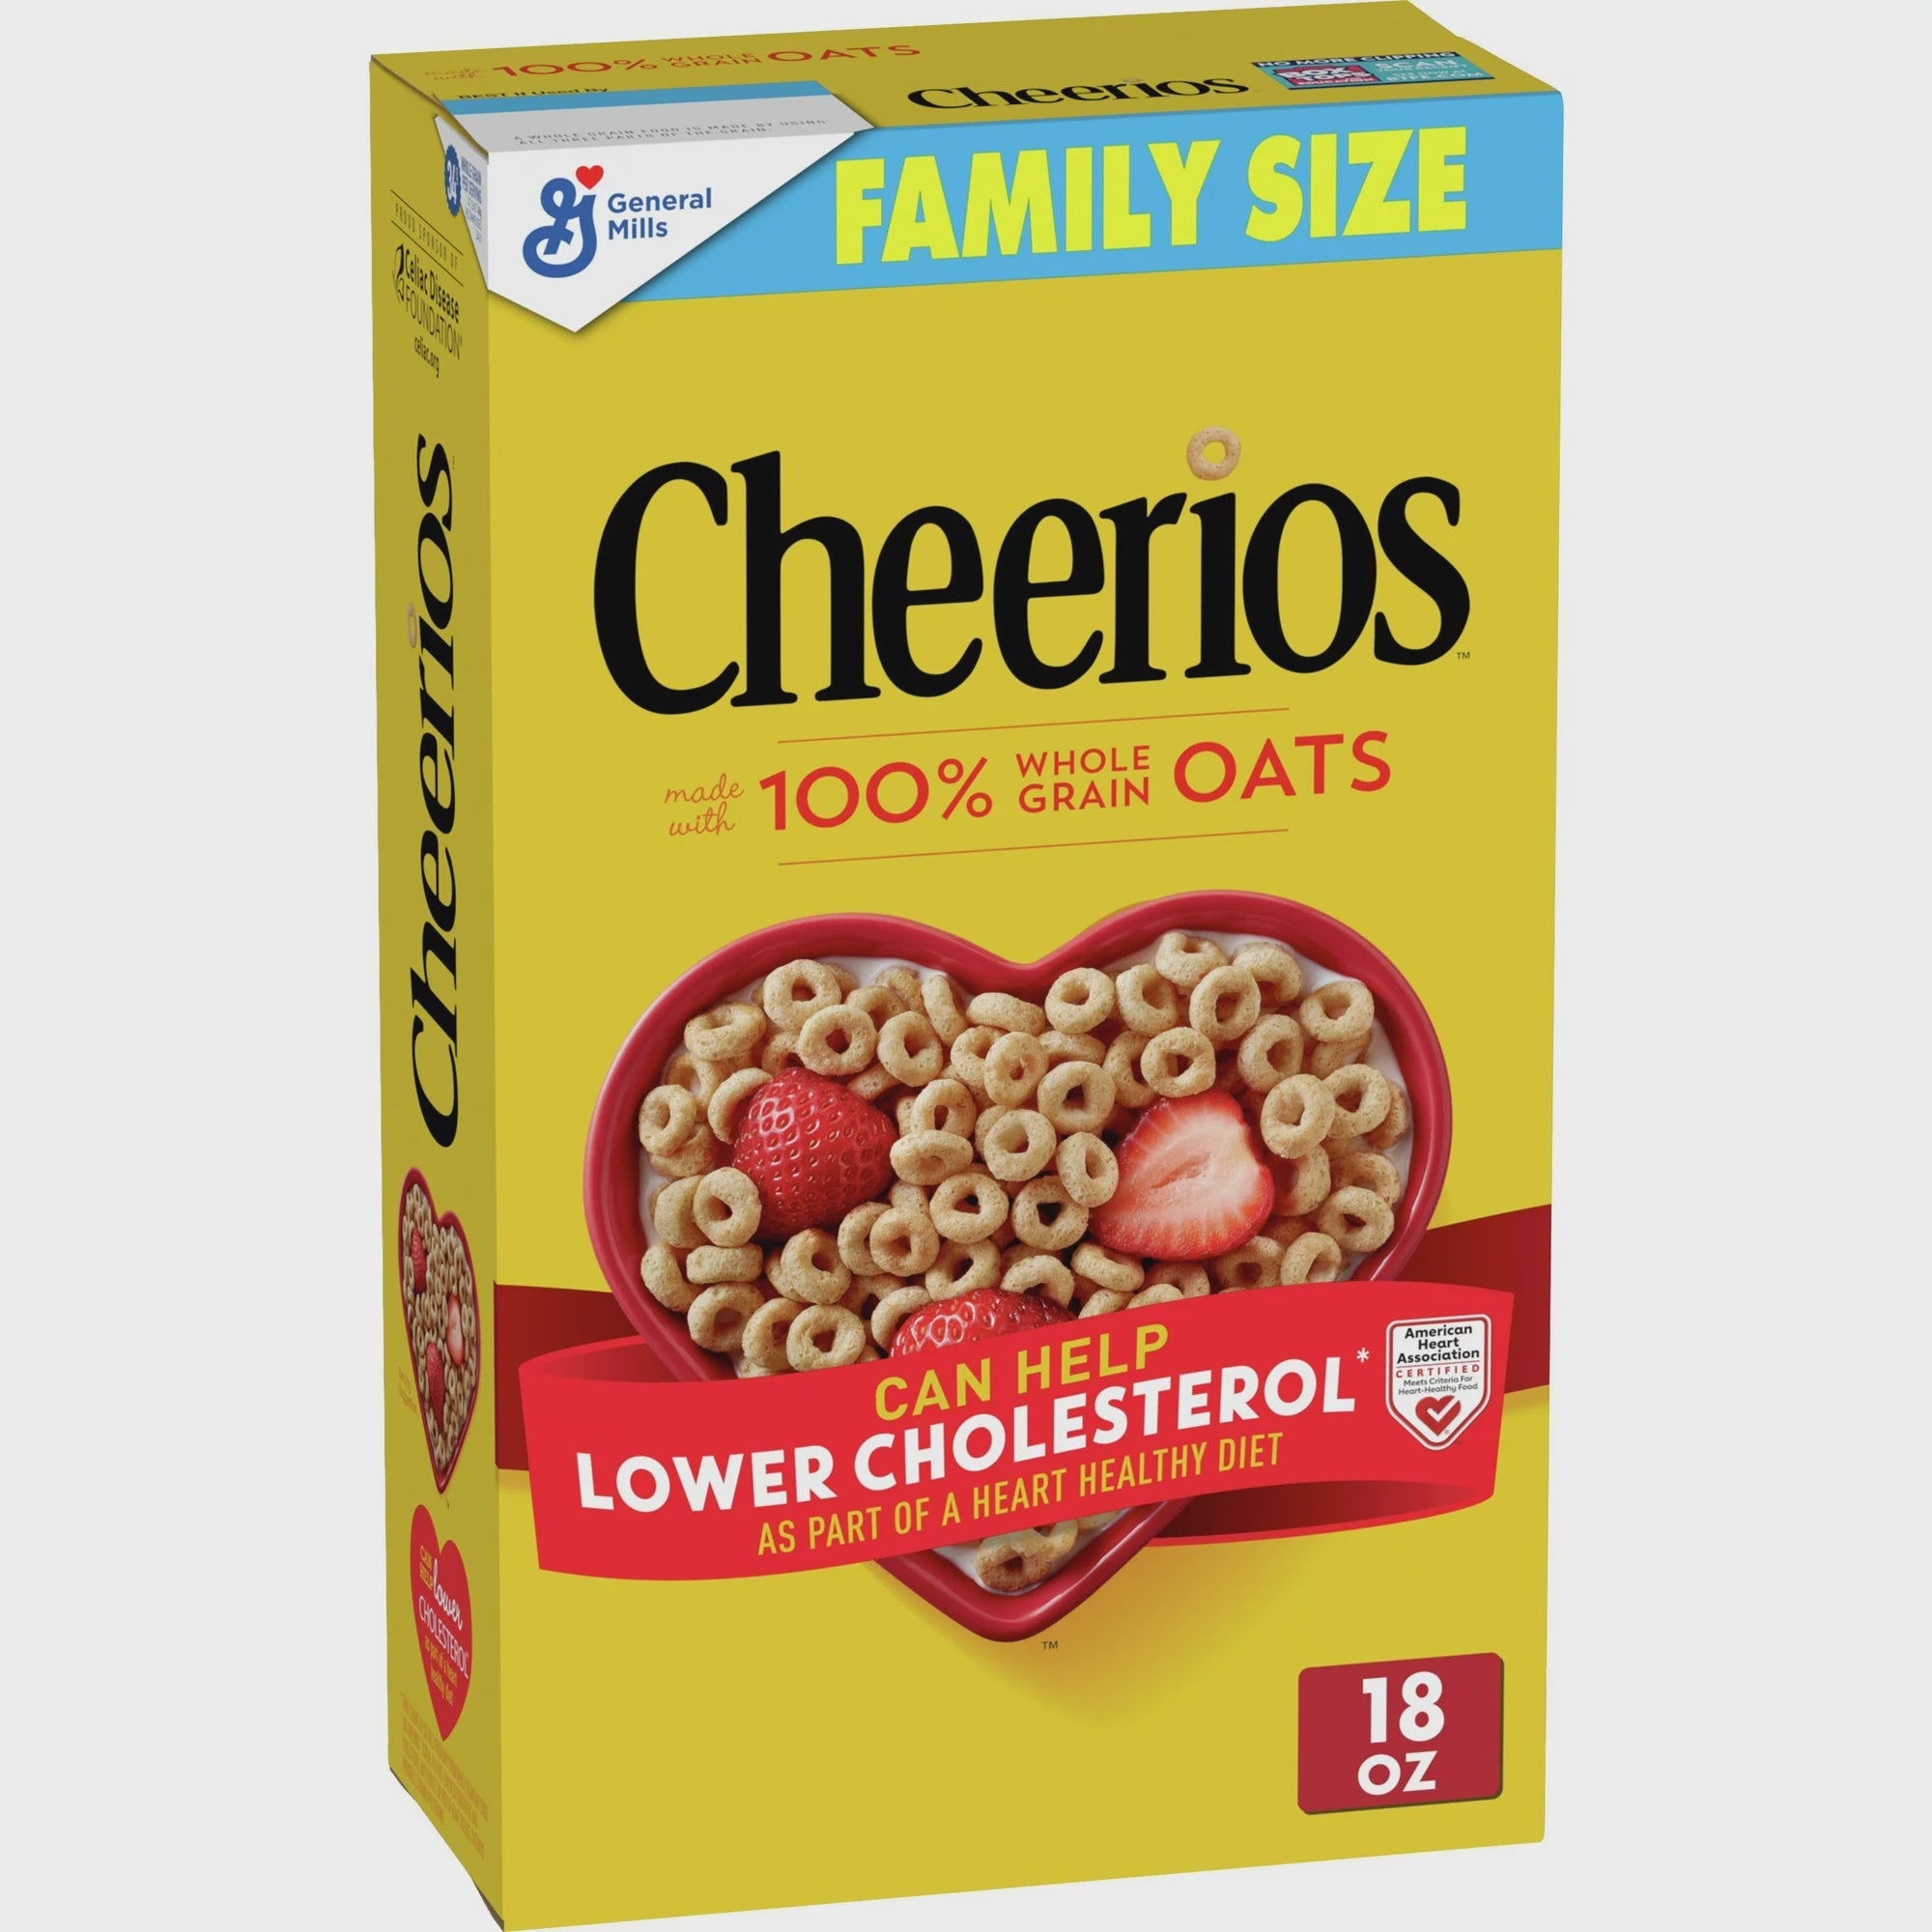 GENERAL MILLS Cheerios Original 20.35oz